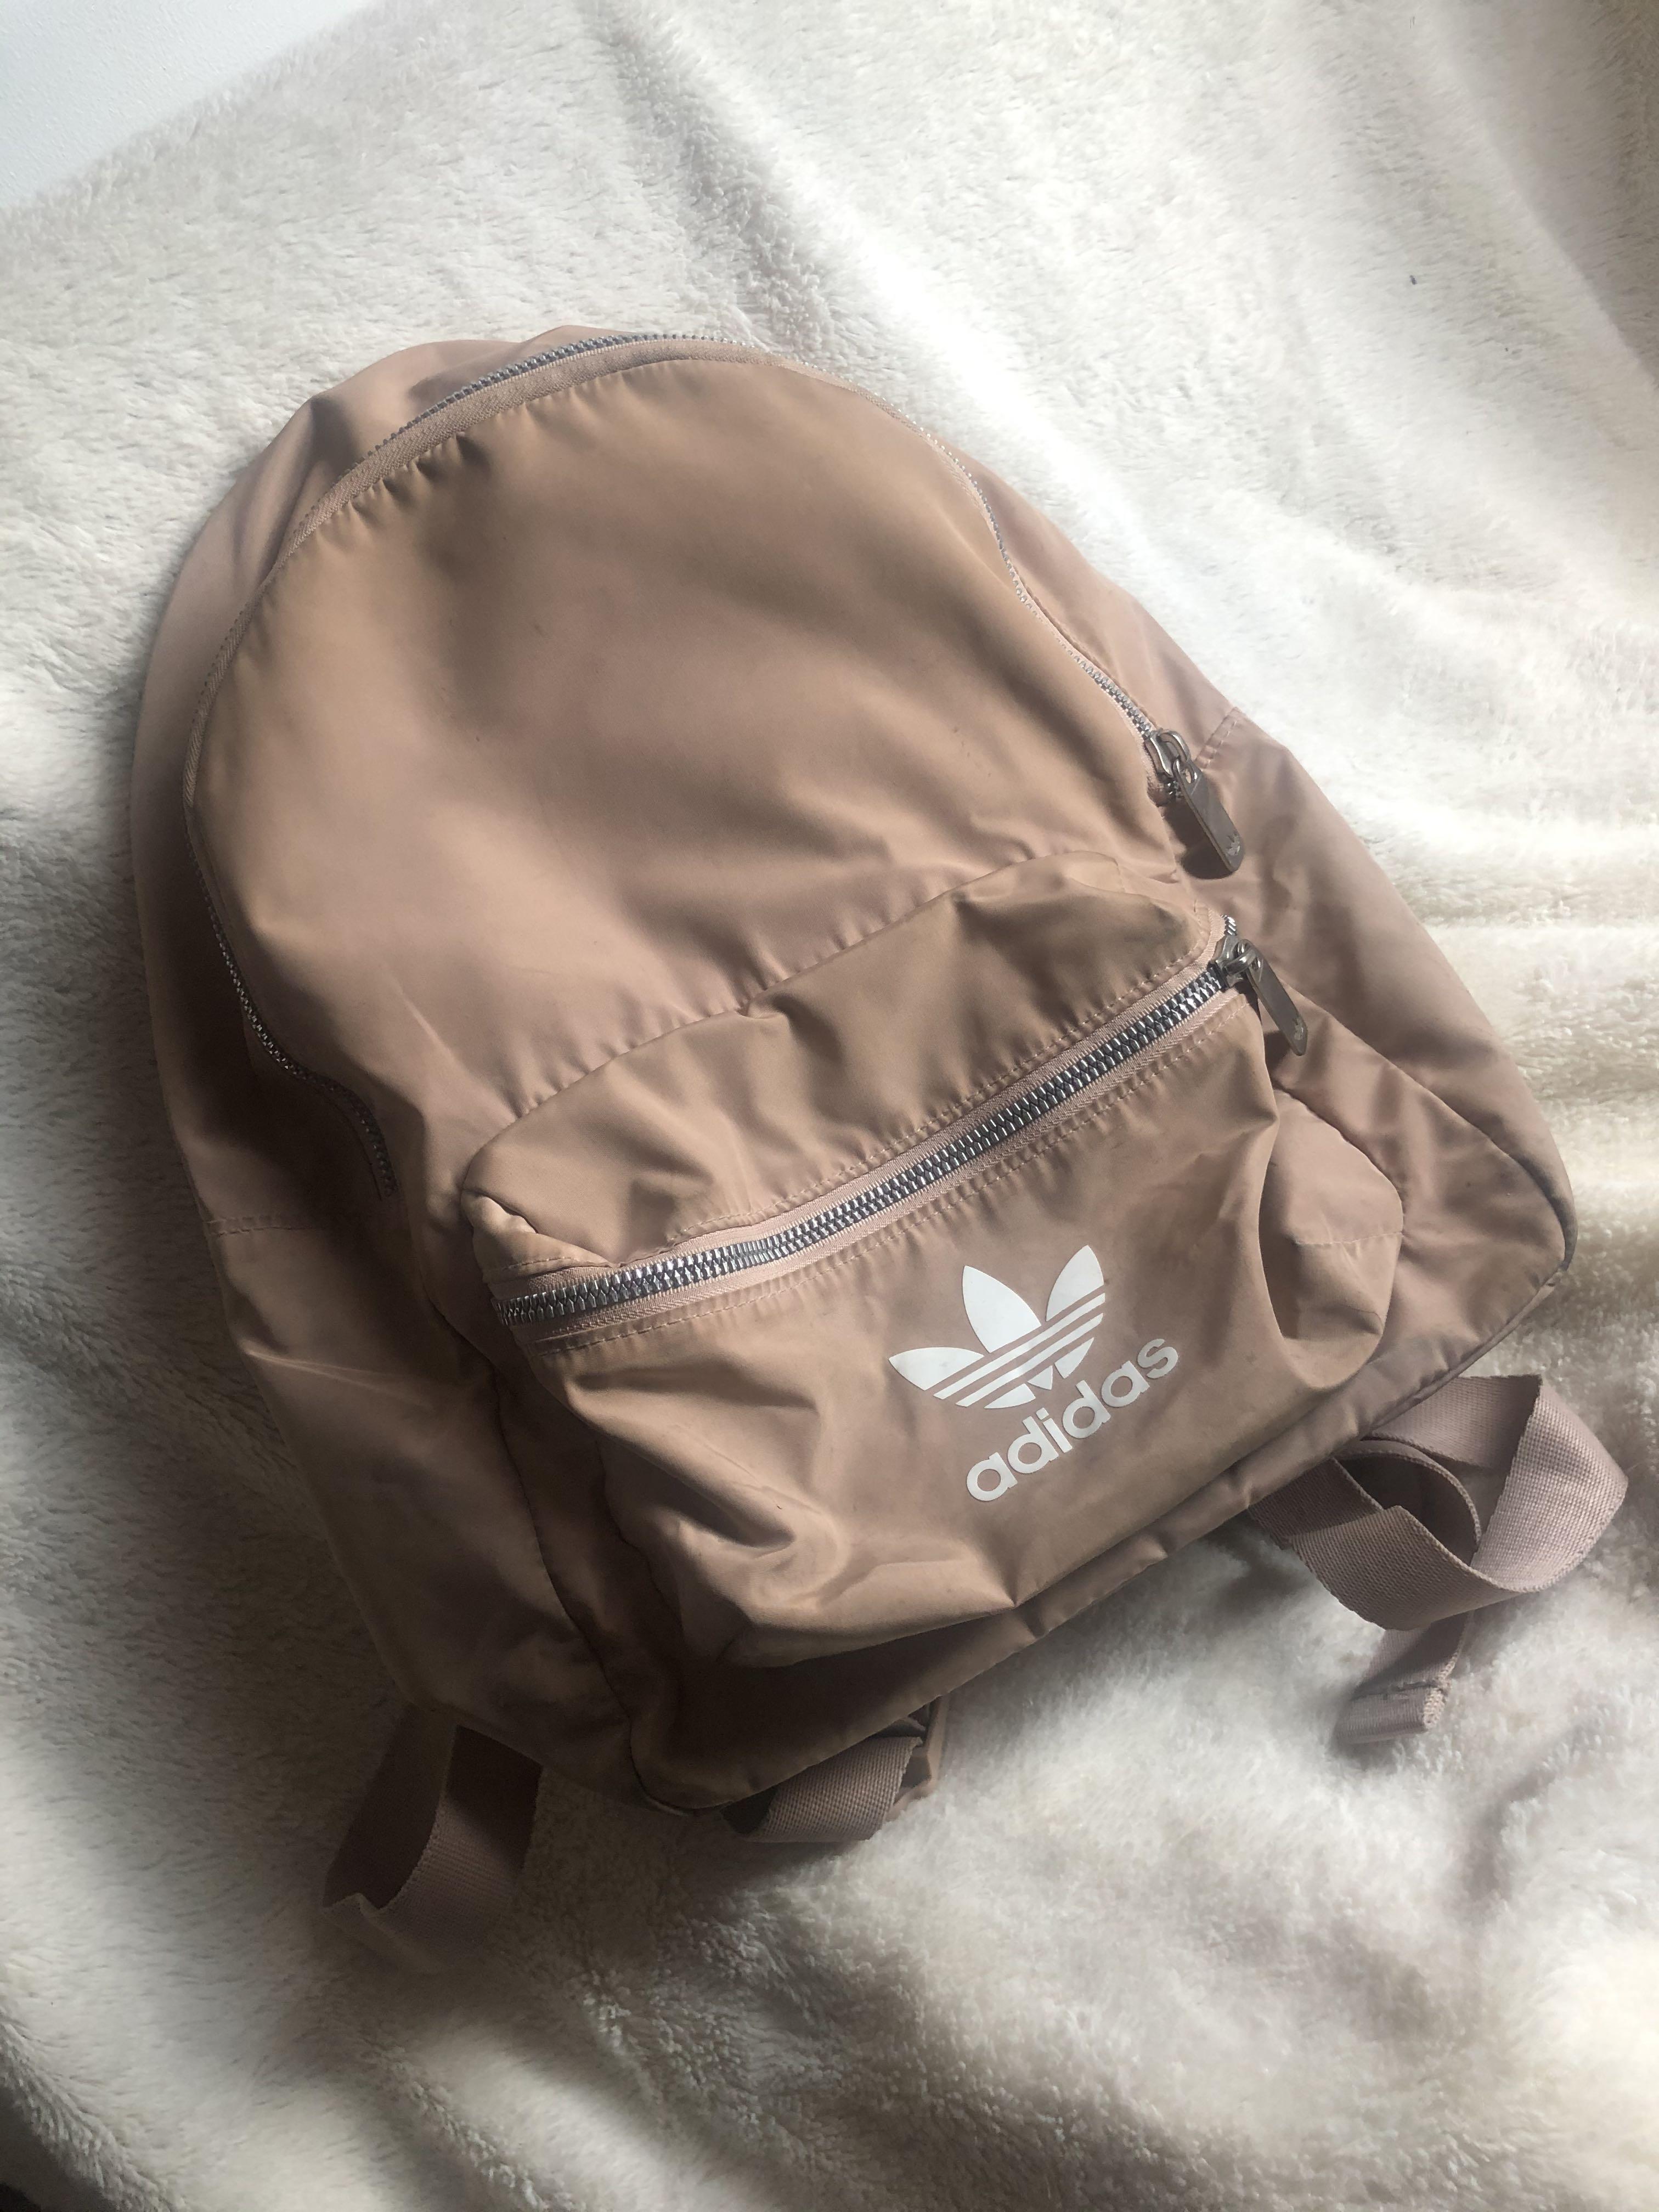 pastel adidas backpack